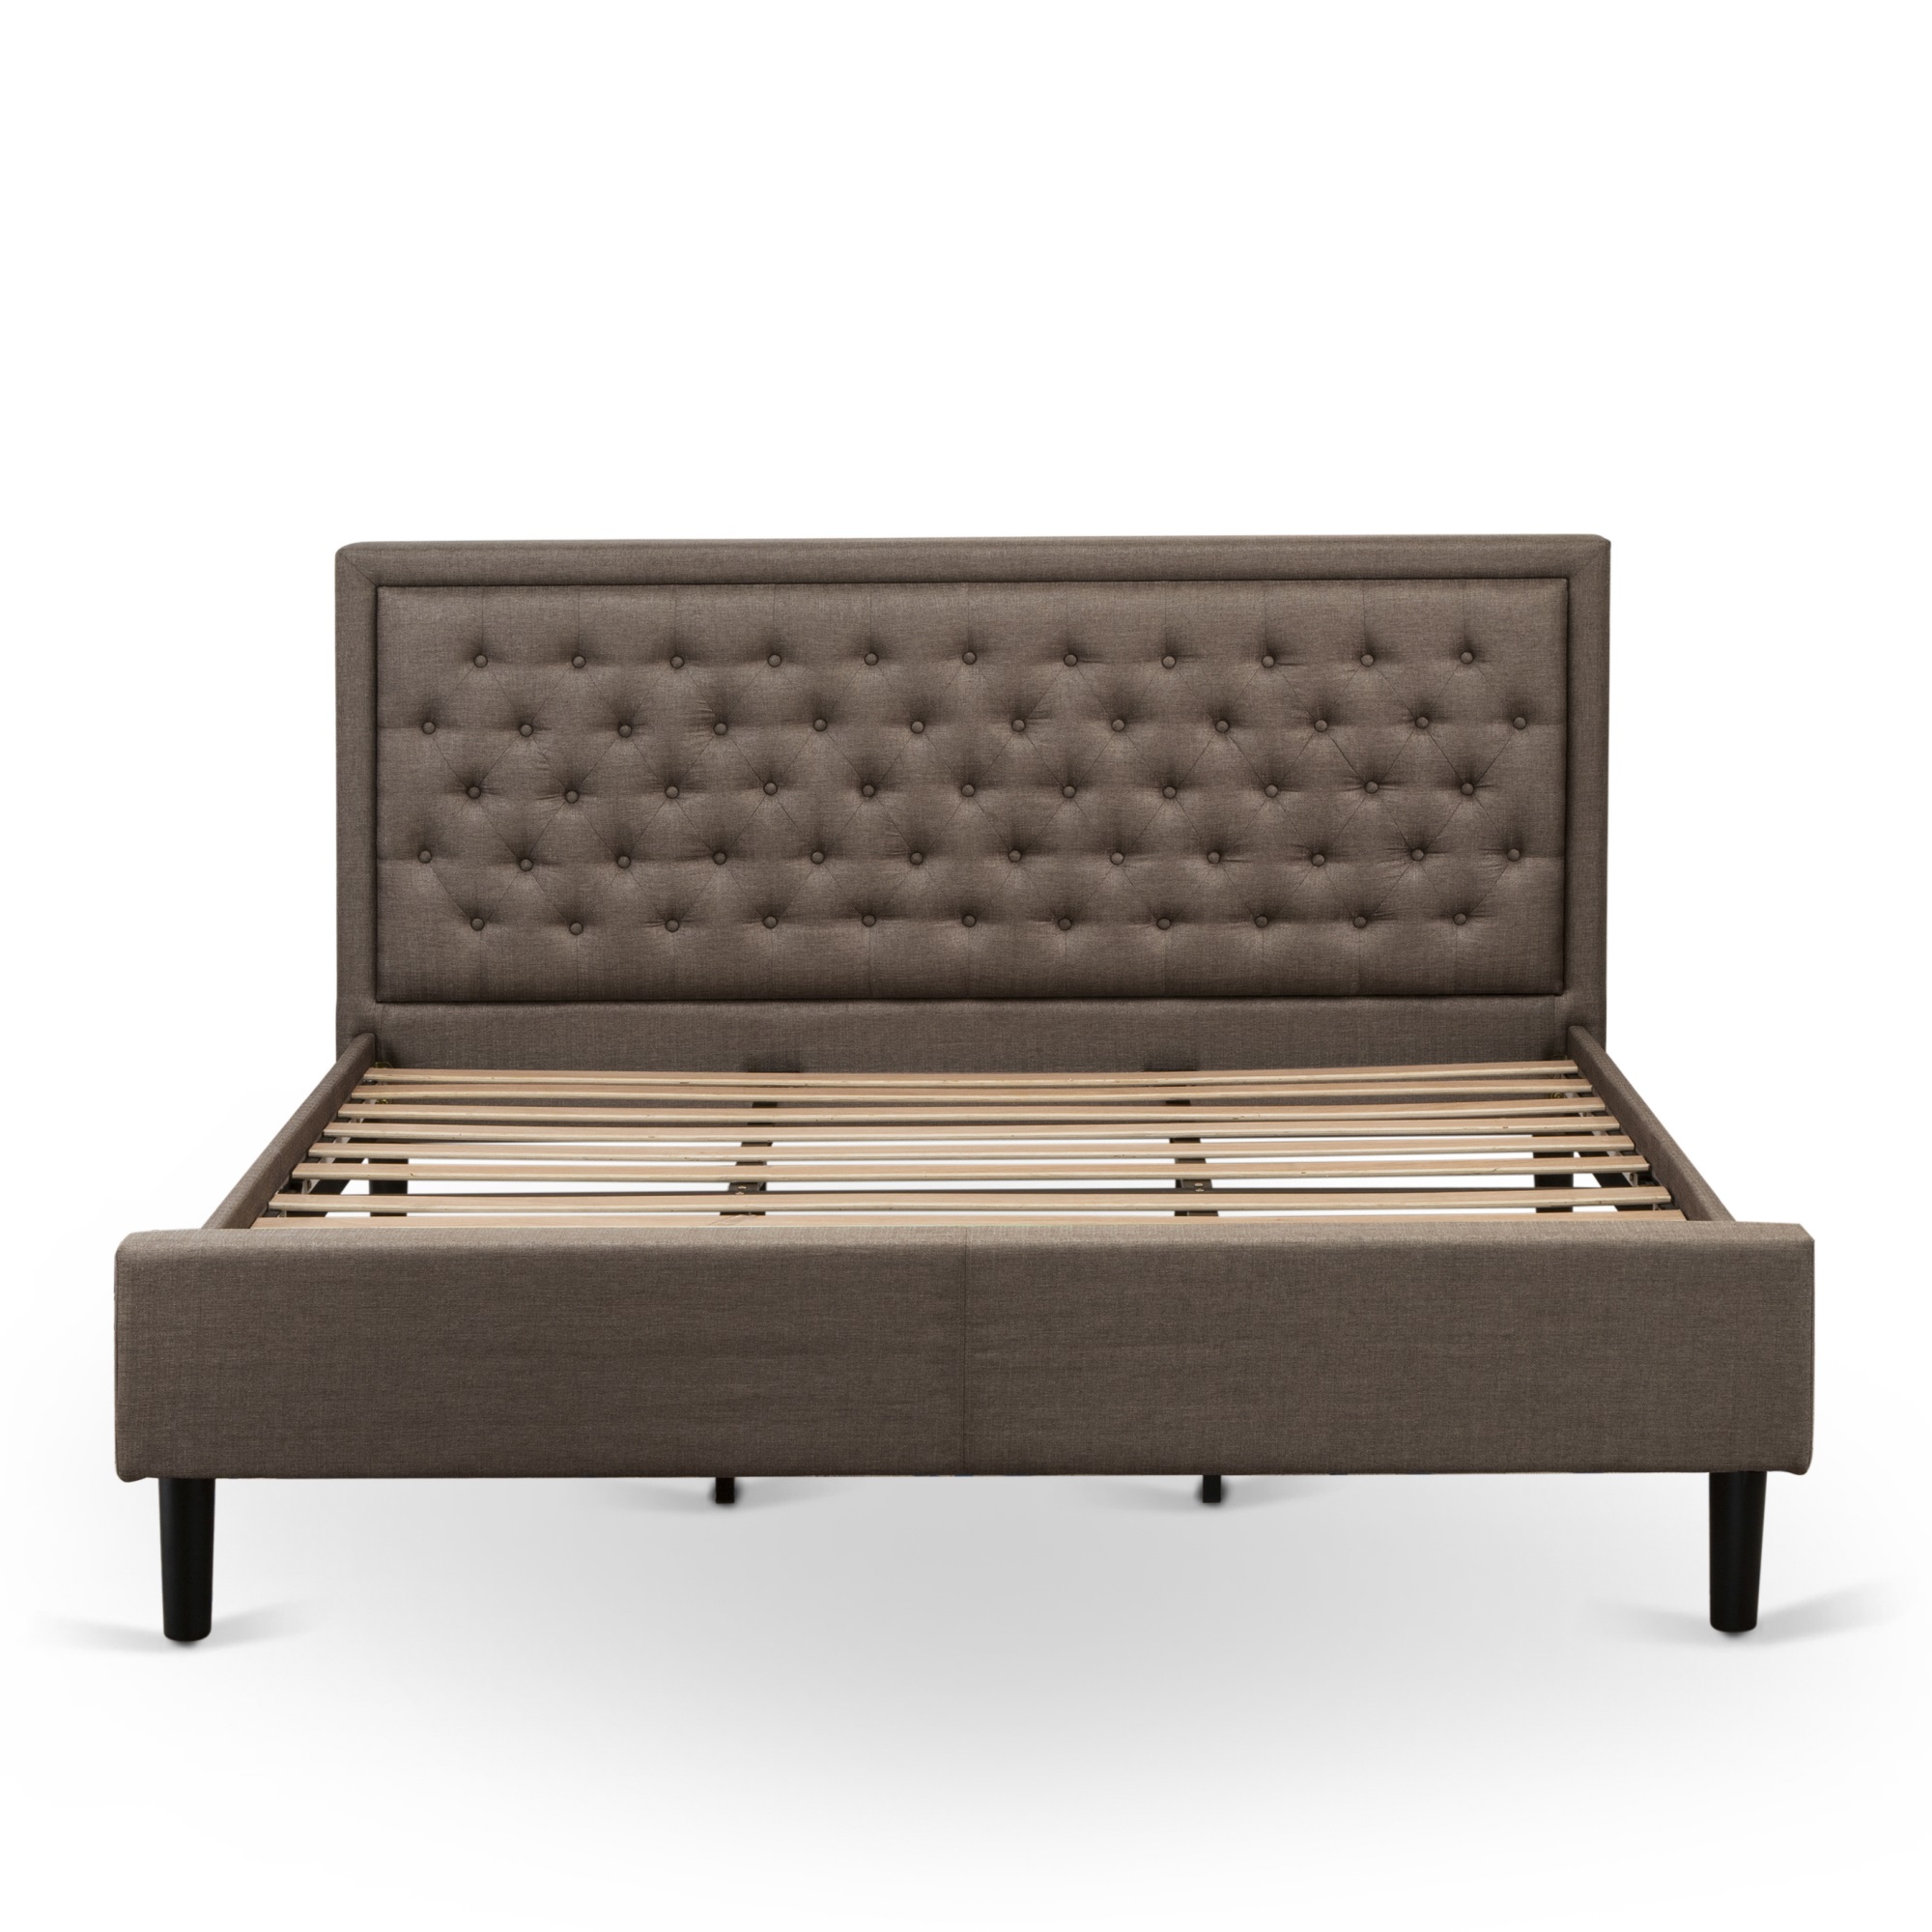 East West Furniture KDF-18-K Platform King Bed Frame Wood - Brown Linen Fabric Upholestered Bed Headboard with Button Tufted T